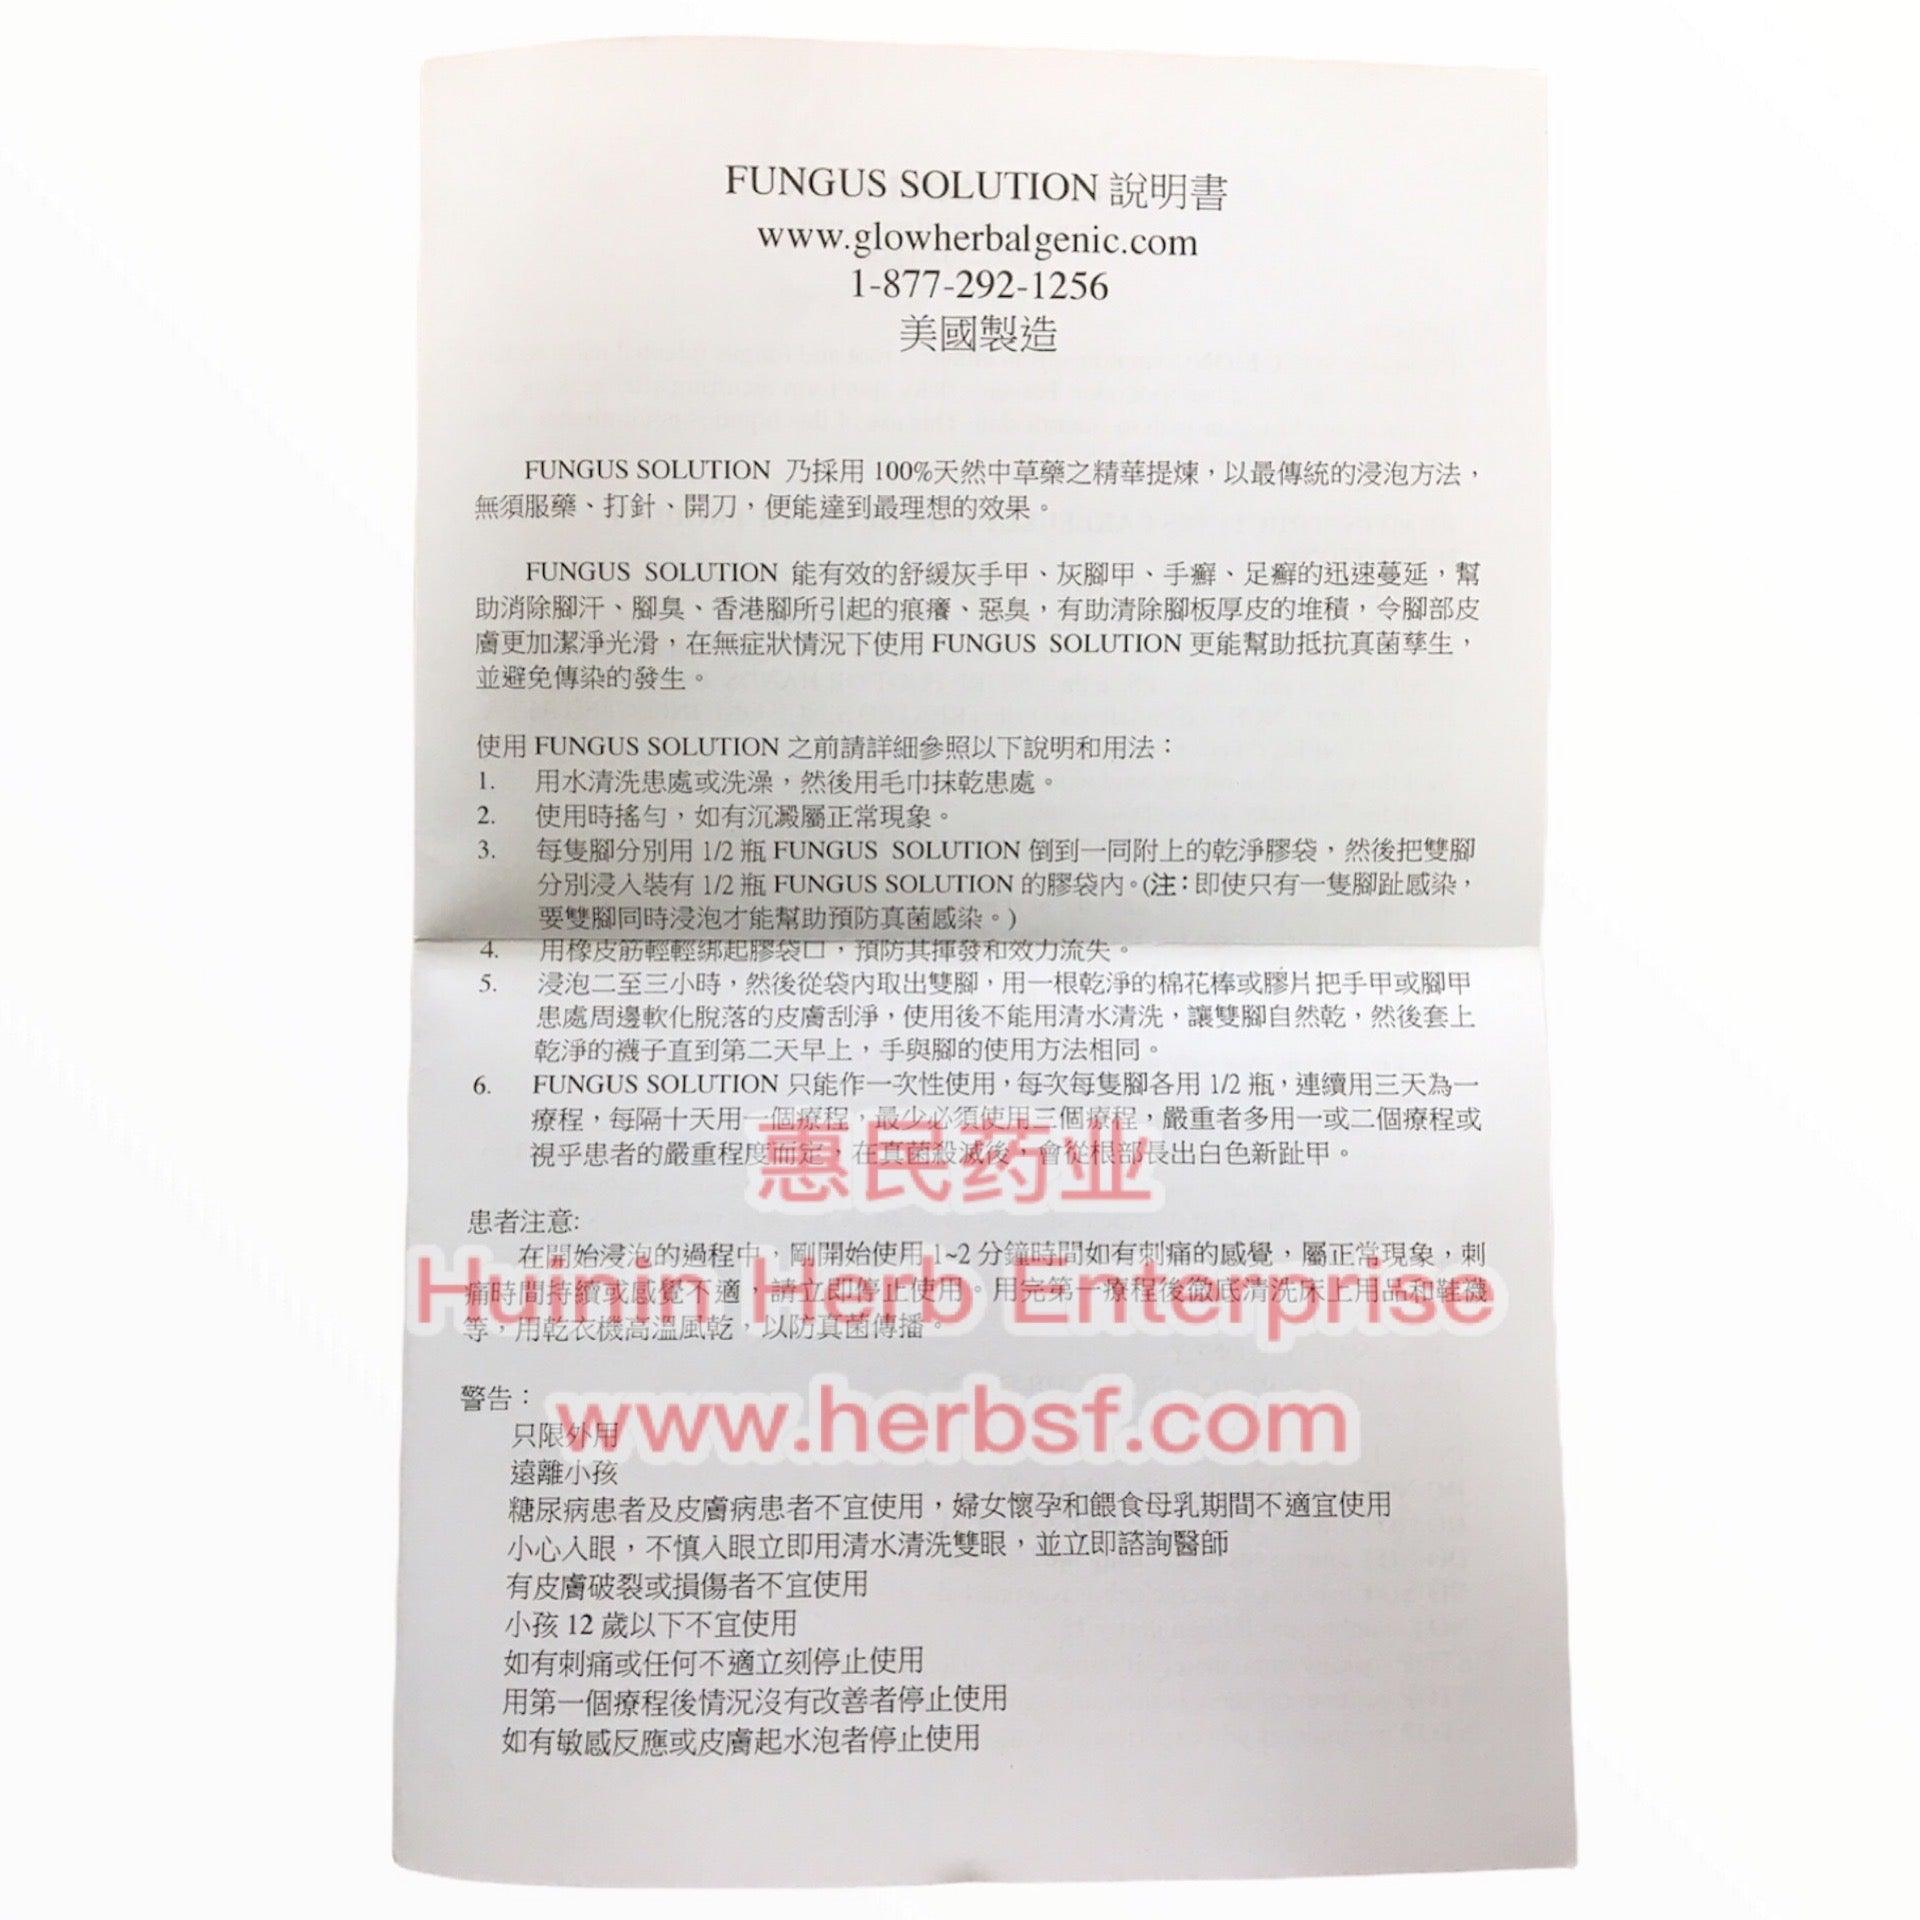 Fungus Solution(48fl. oz X 3bottles) - Huimin Herb Online, LLC